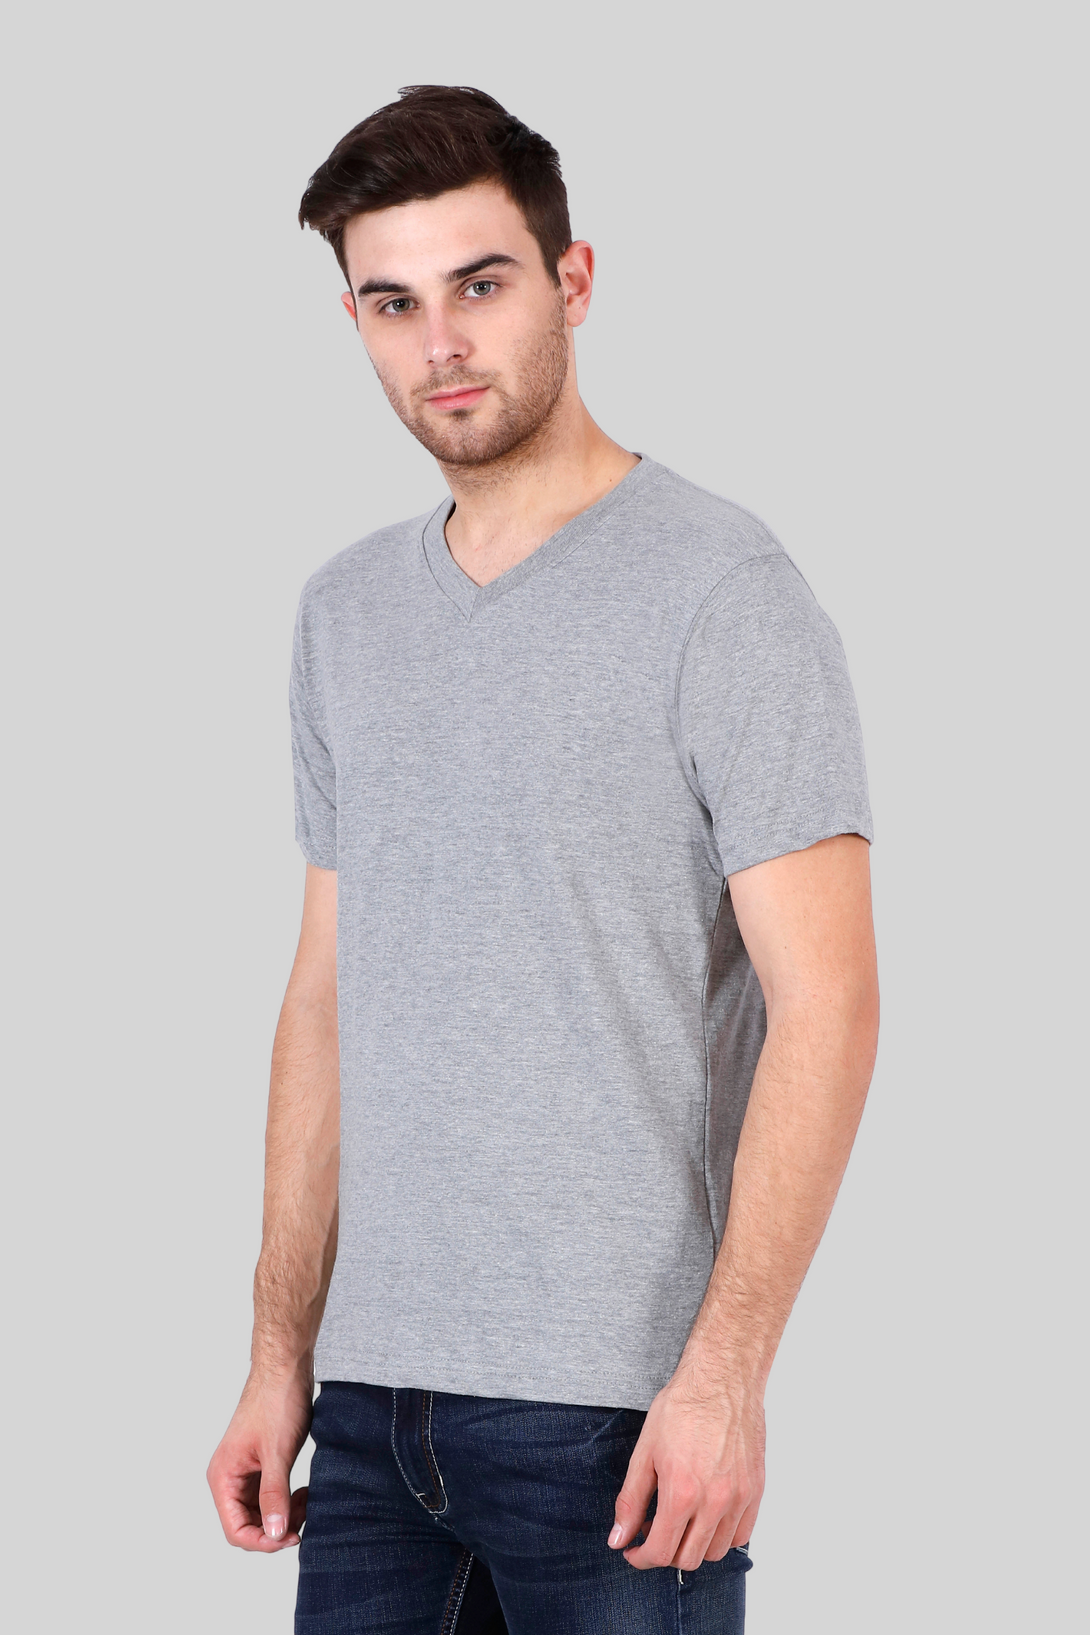 Grey Melange V Neck T-Shirt For Men - WowWaves - 6